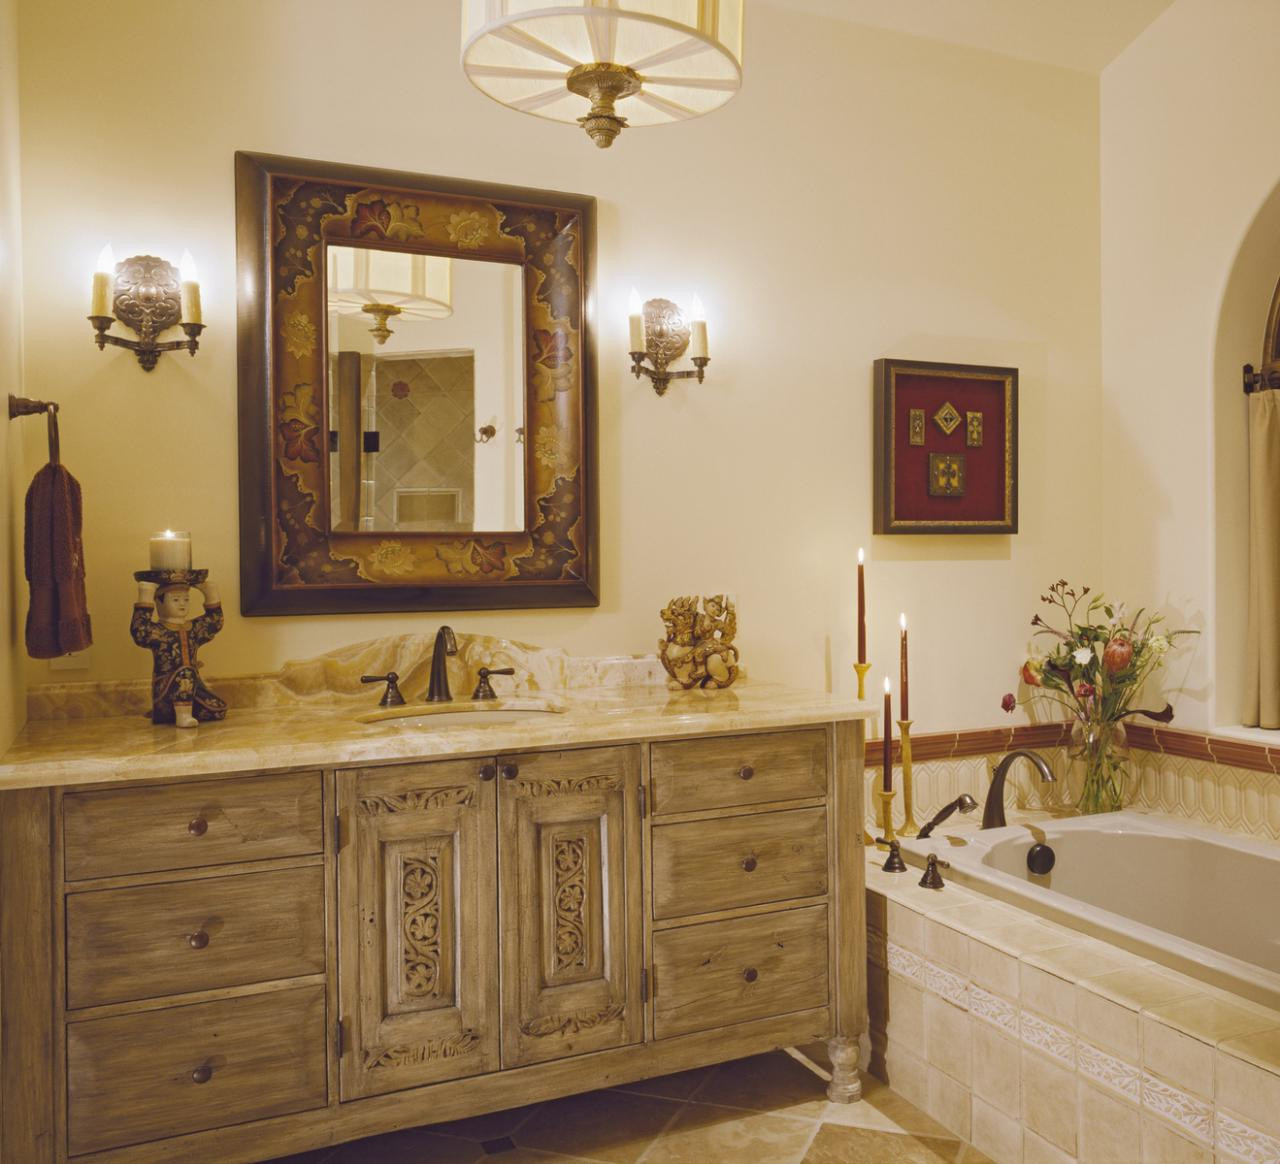 Antique Bathroom Cabinets
 Updating With Antique Bathroom Vanity Interior Design